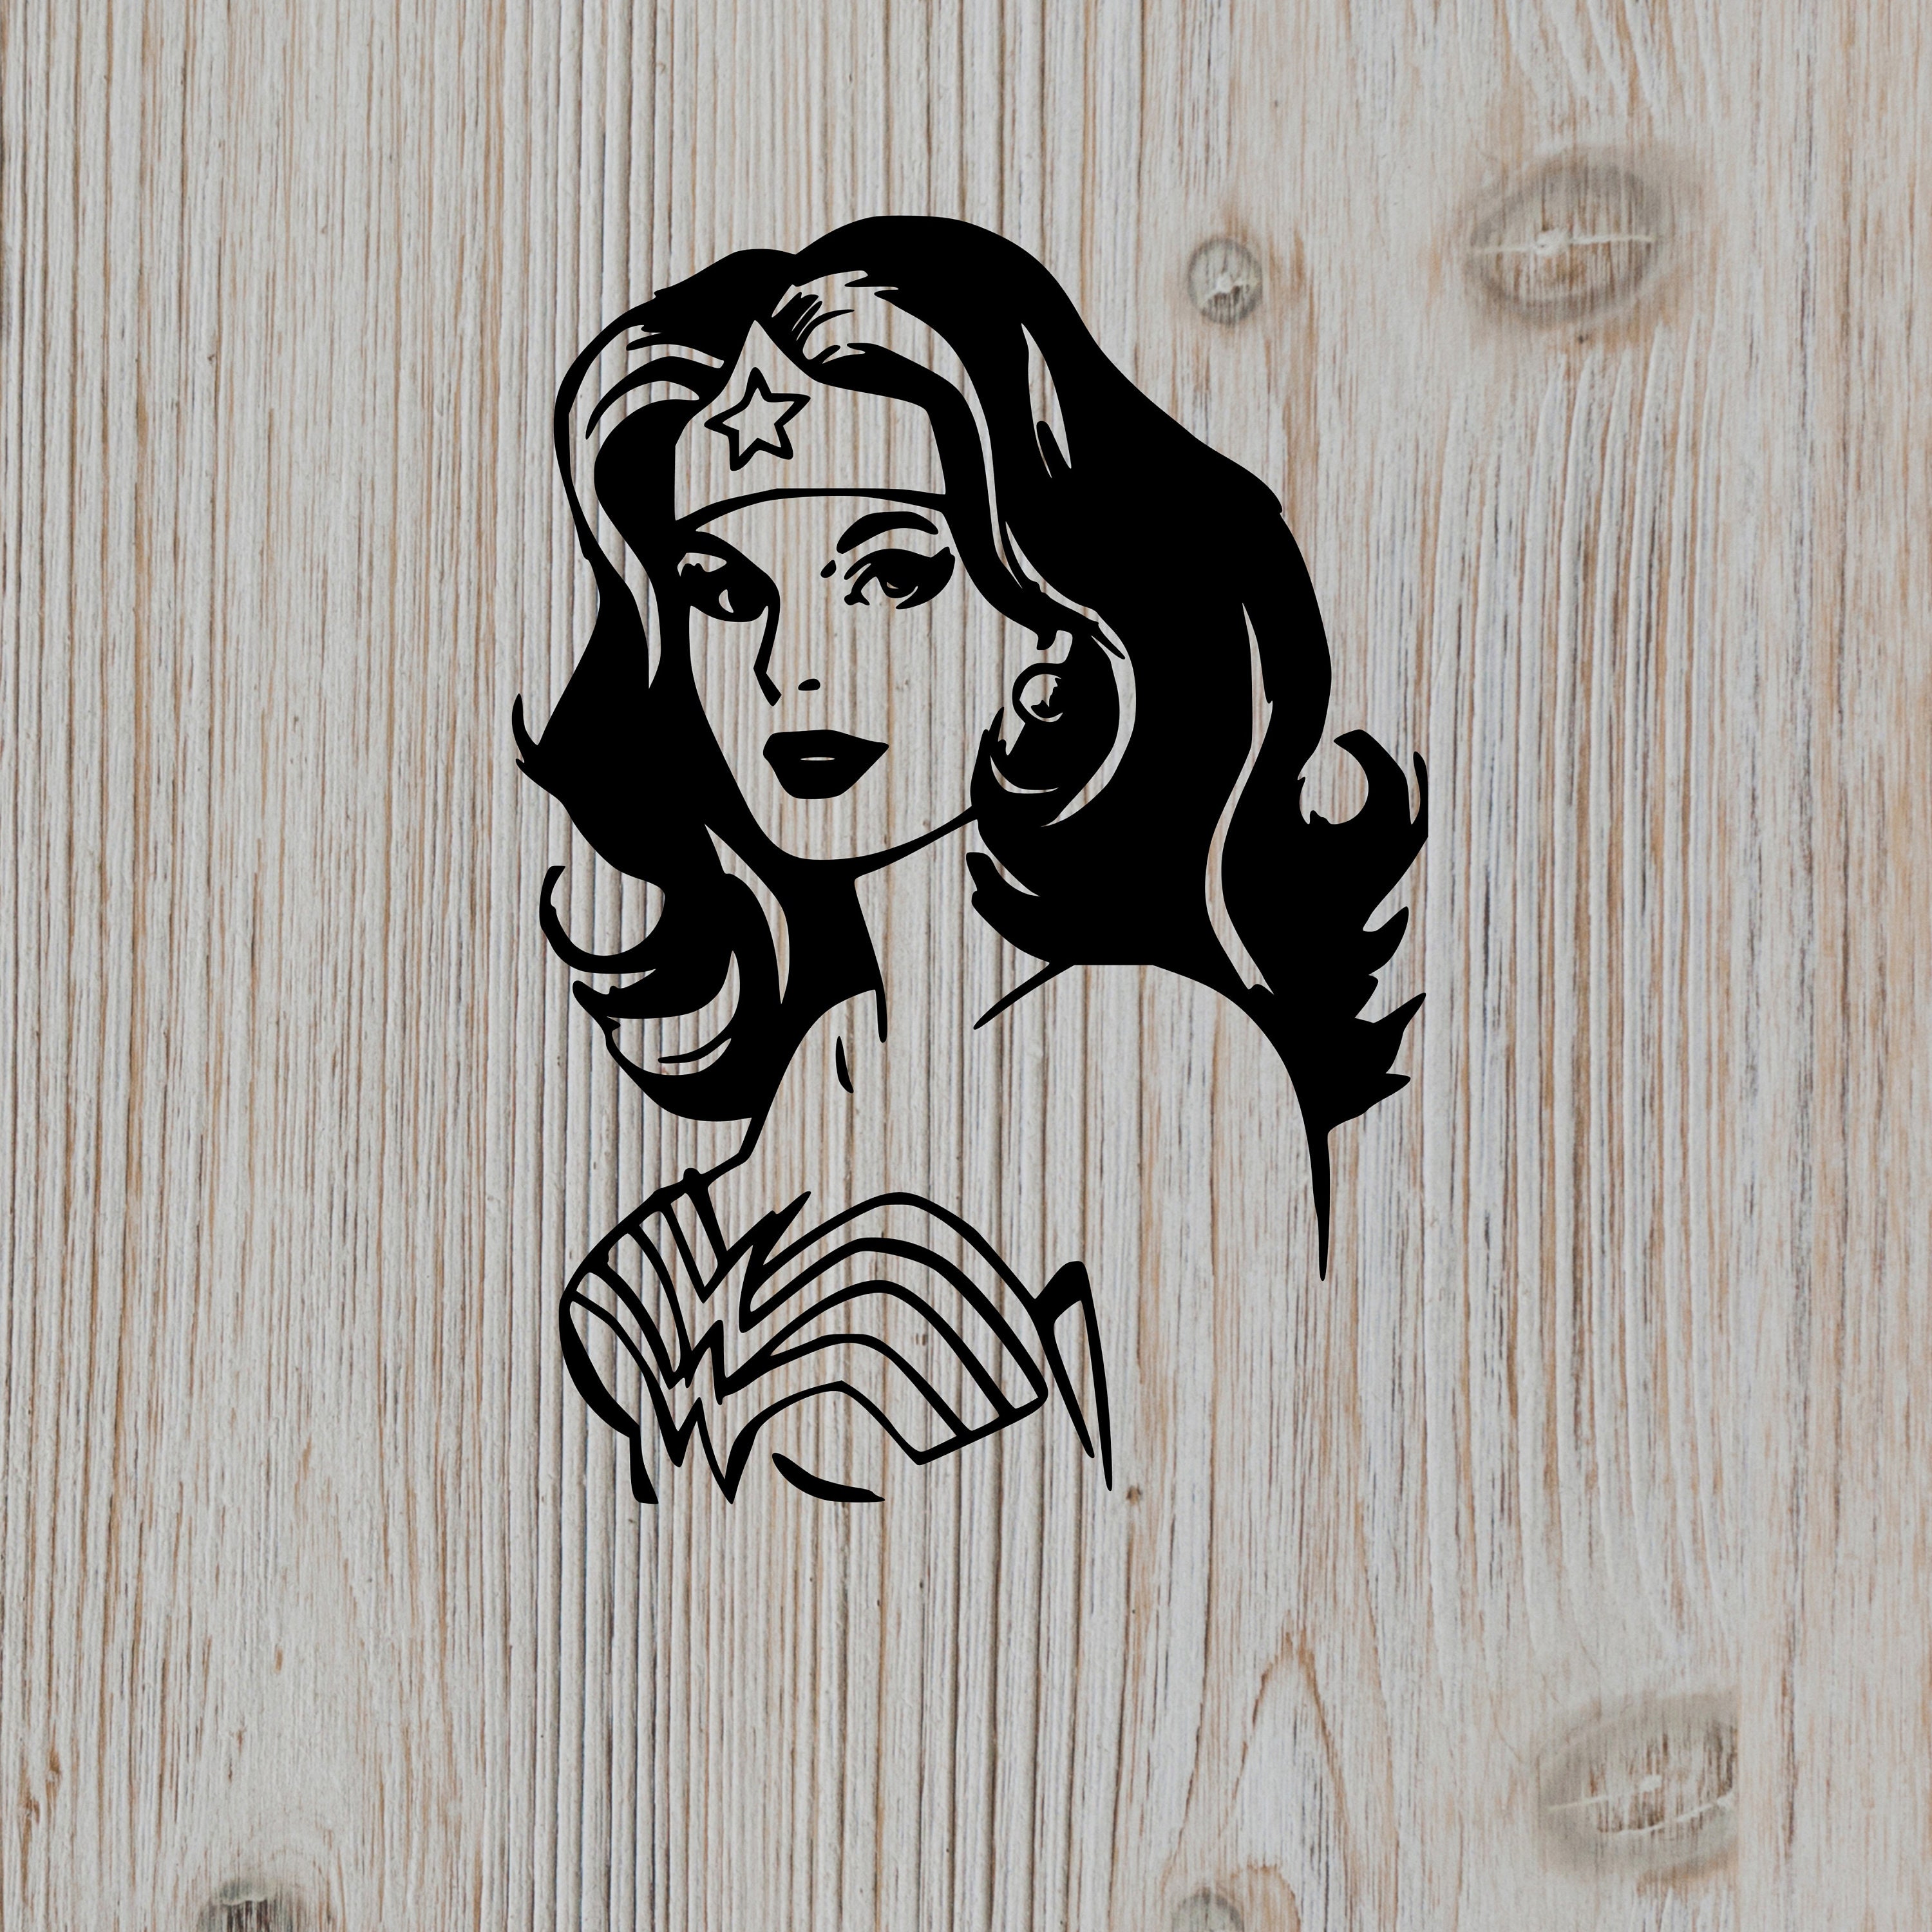 70s Style Wonder Woman Silhouette cut fileWonder Woman svg